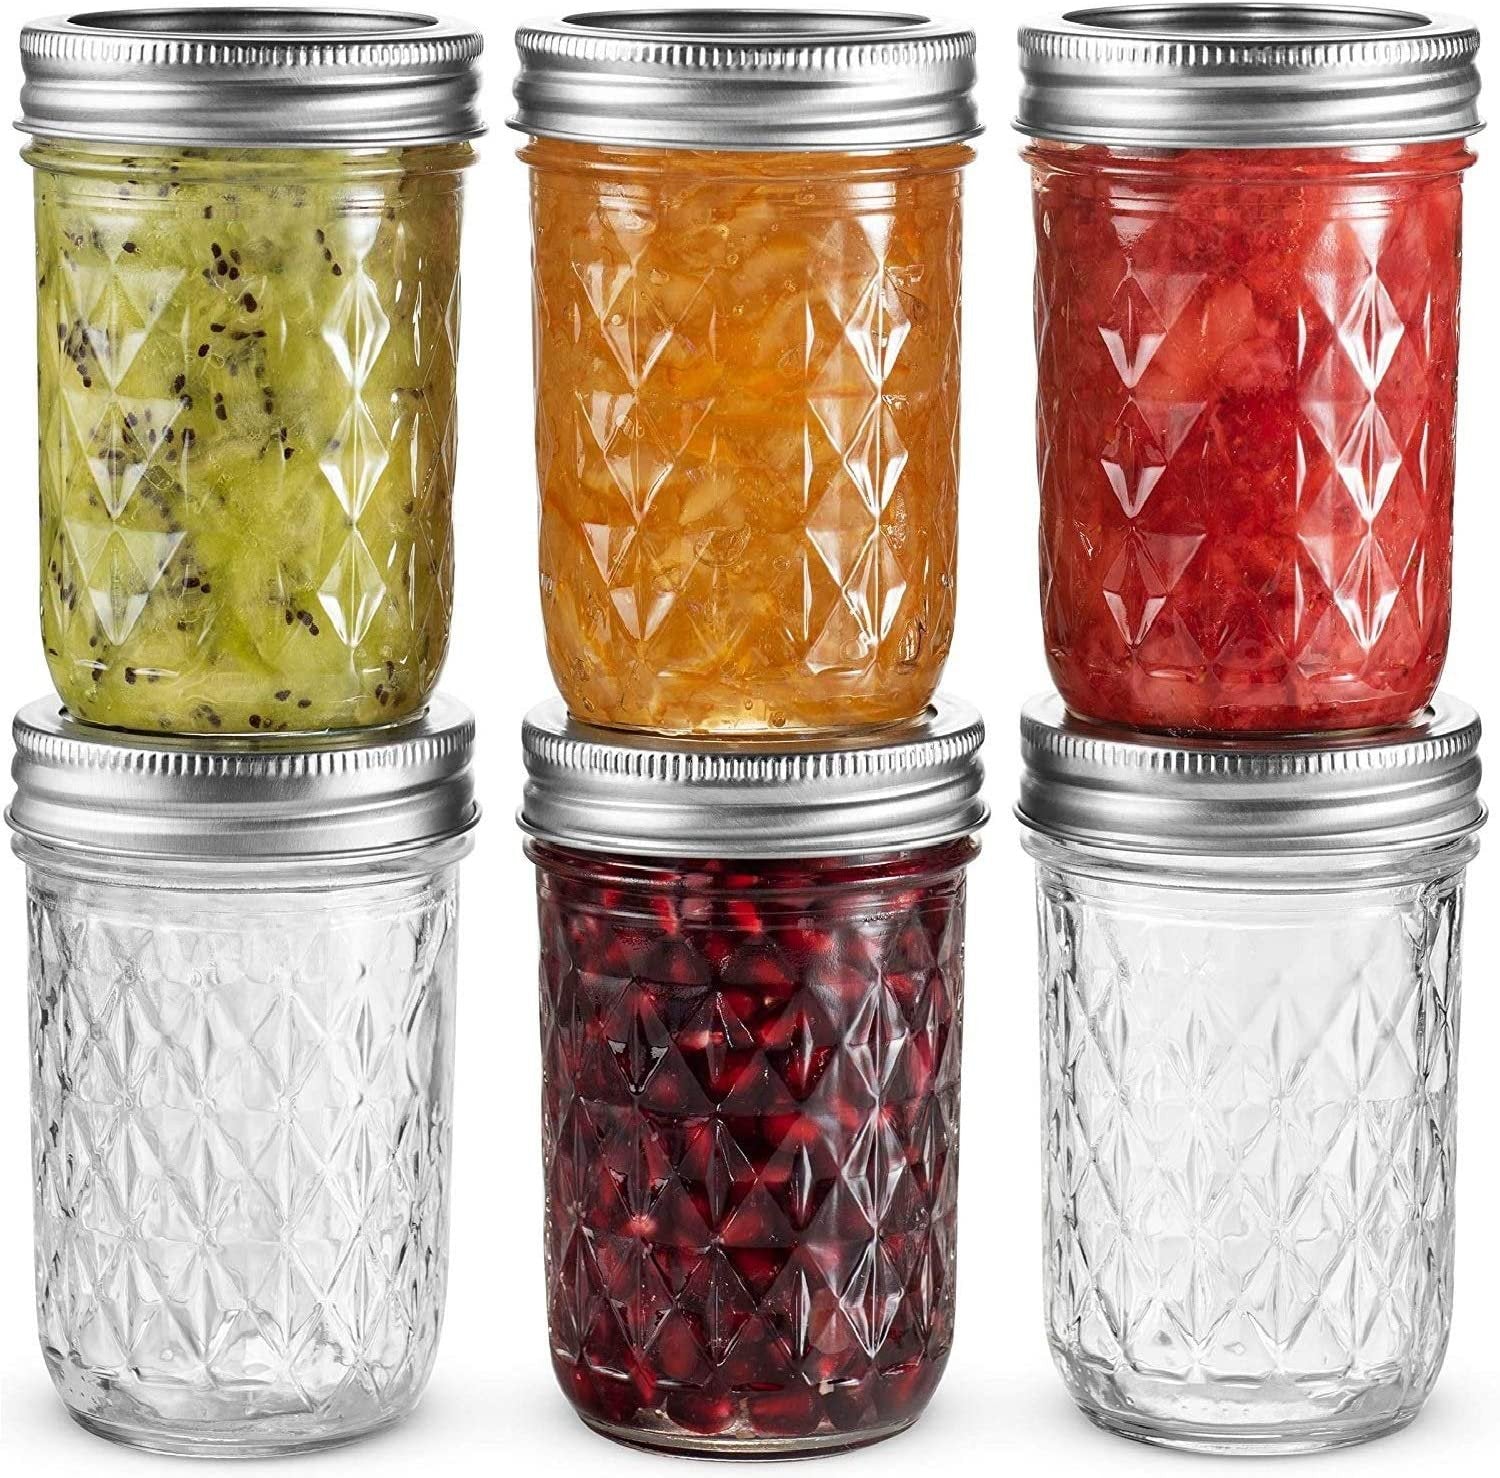 Regular Mouth Mason Jars 8 oz [6 Pack] Jelly Jars with Lids 8 oz. For Canning, Fermenting, Conserving Syrups, Sauces, Jams, Baby Foods - Microwave/Freeze/Dishwasher Safe + SEWANTA Jar Opener